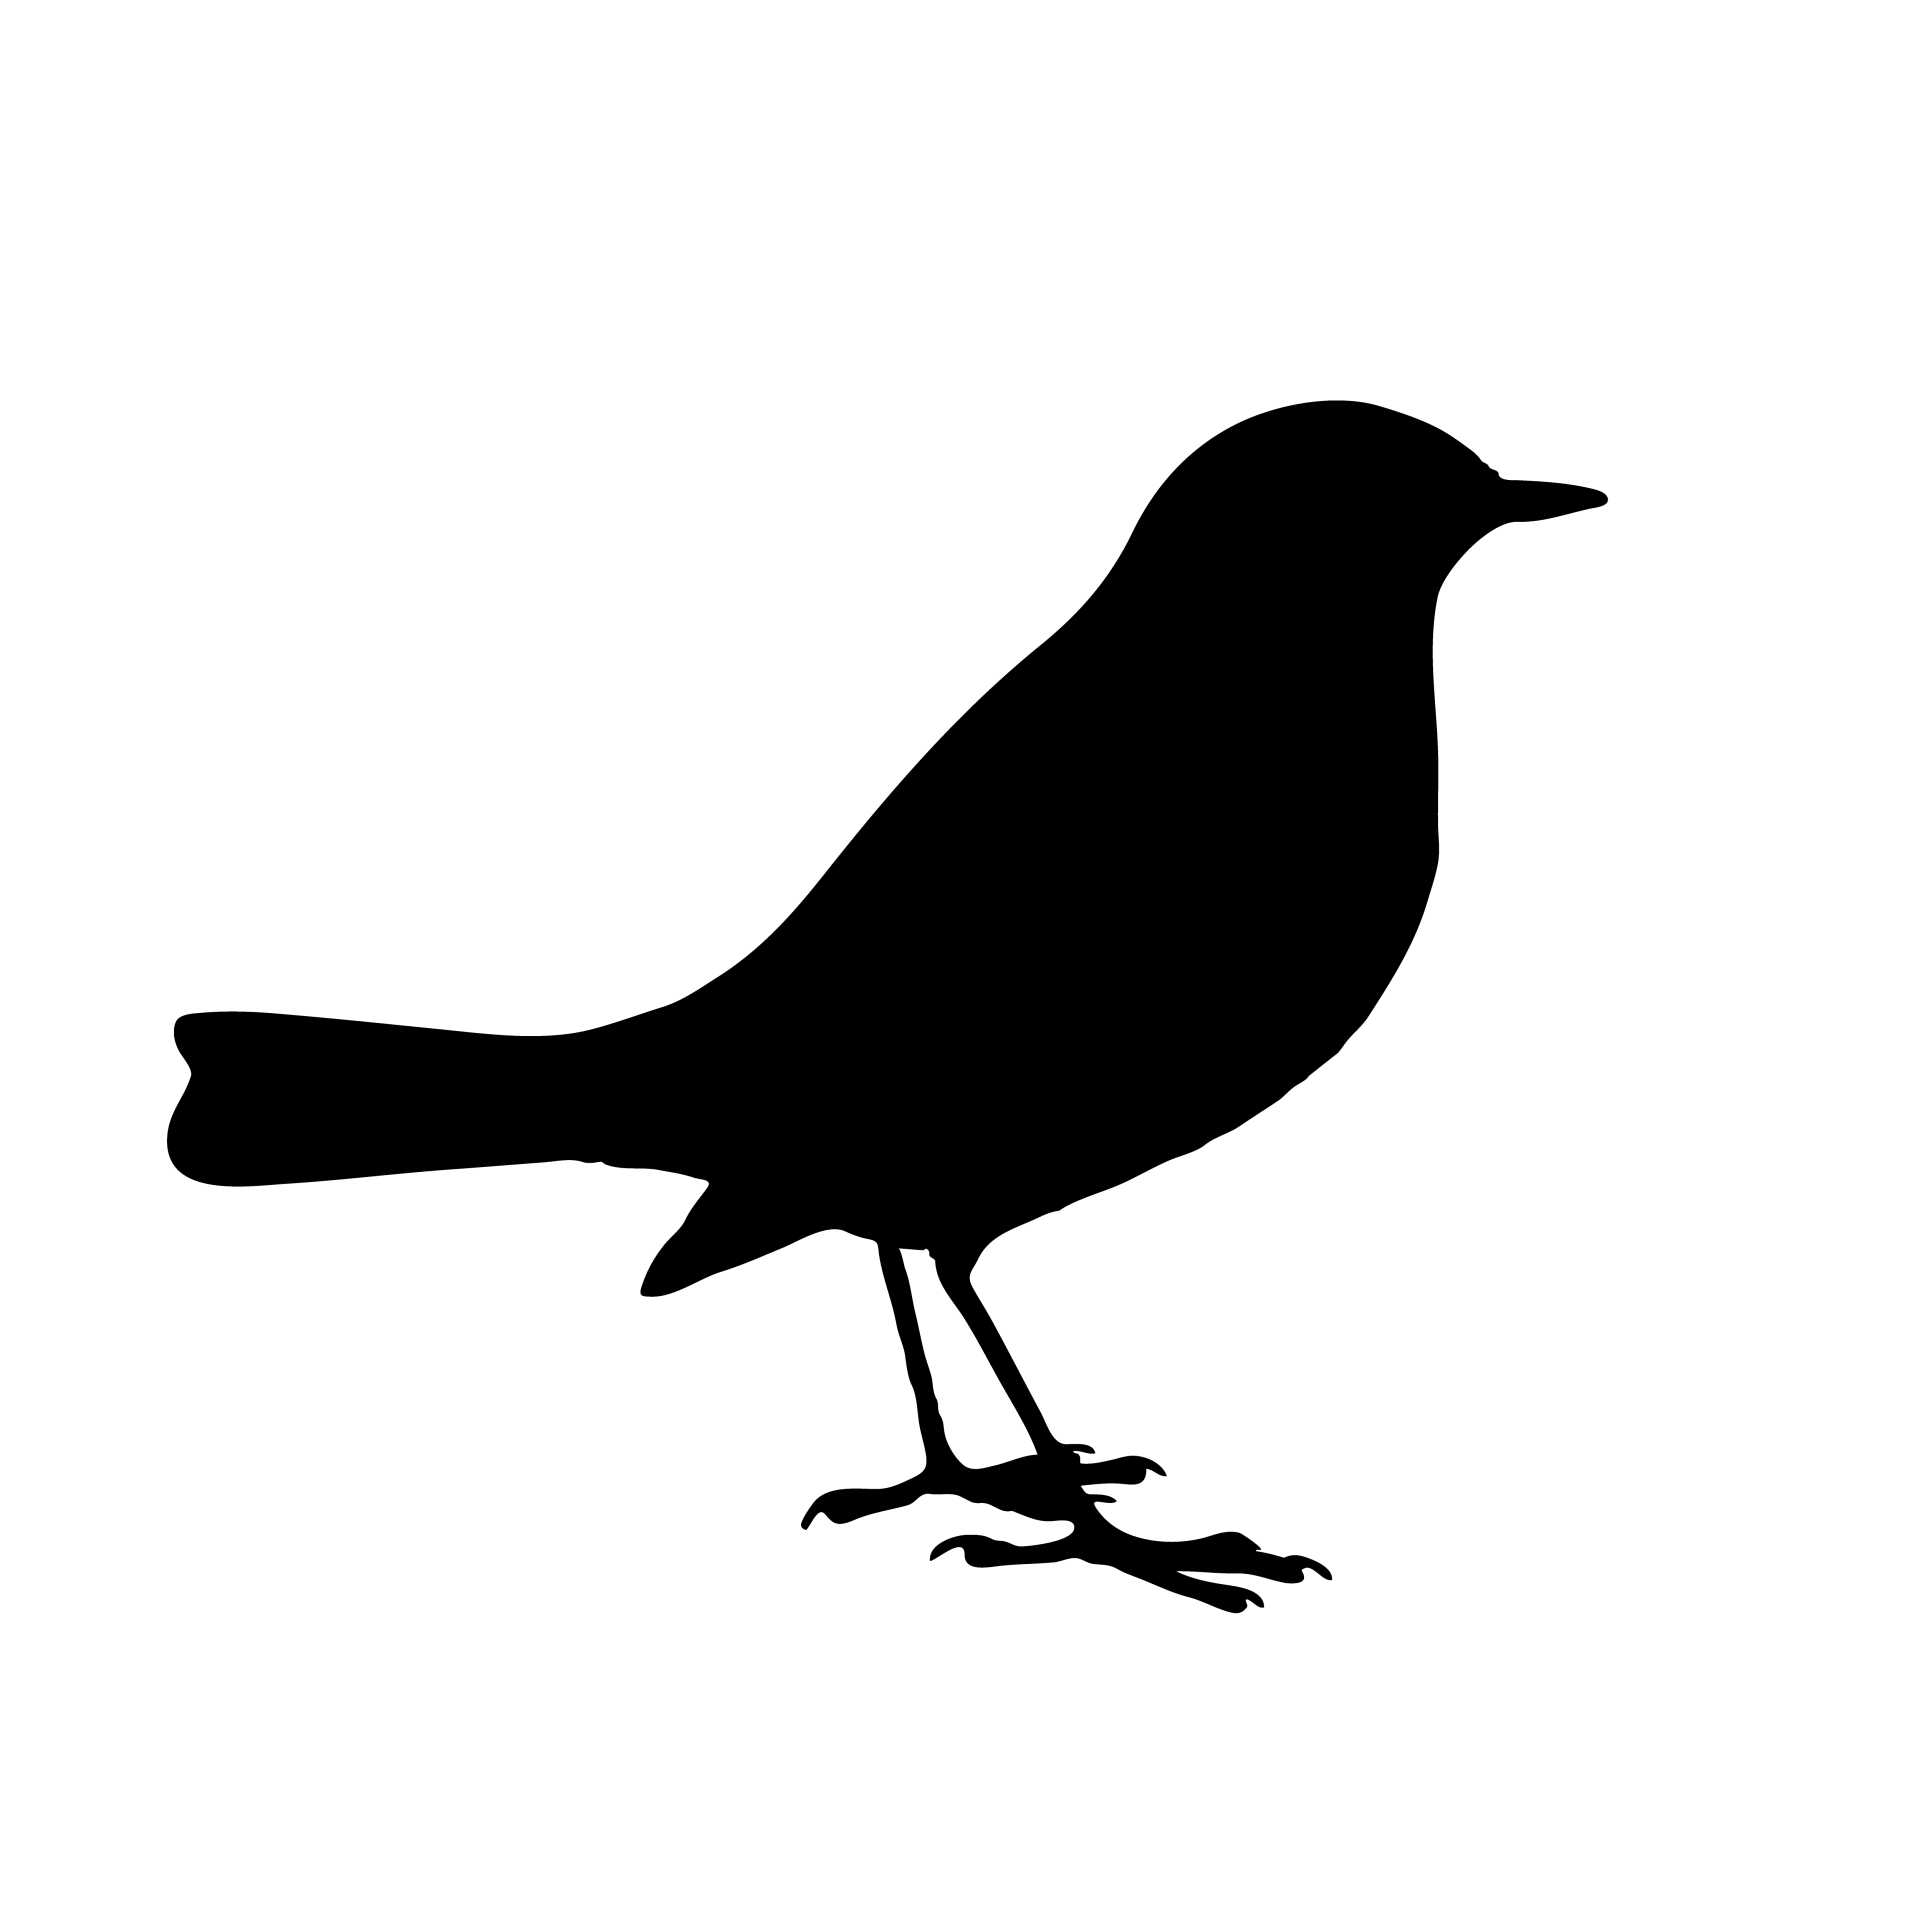 Robin Redbreast silhouet